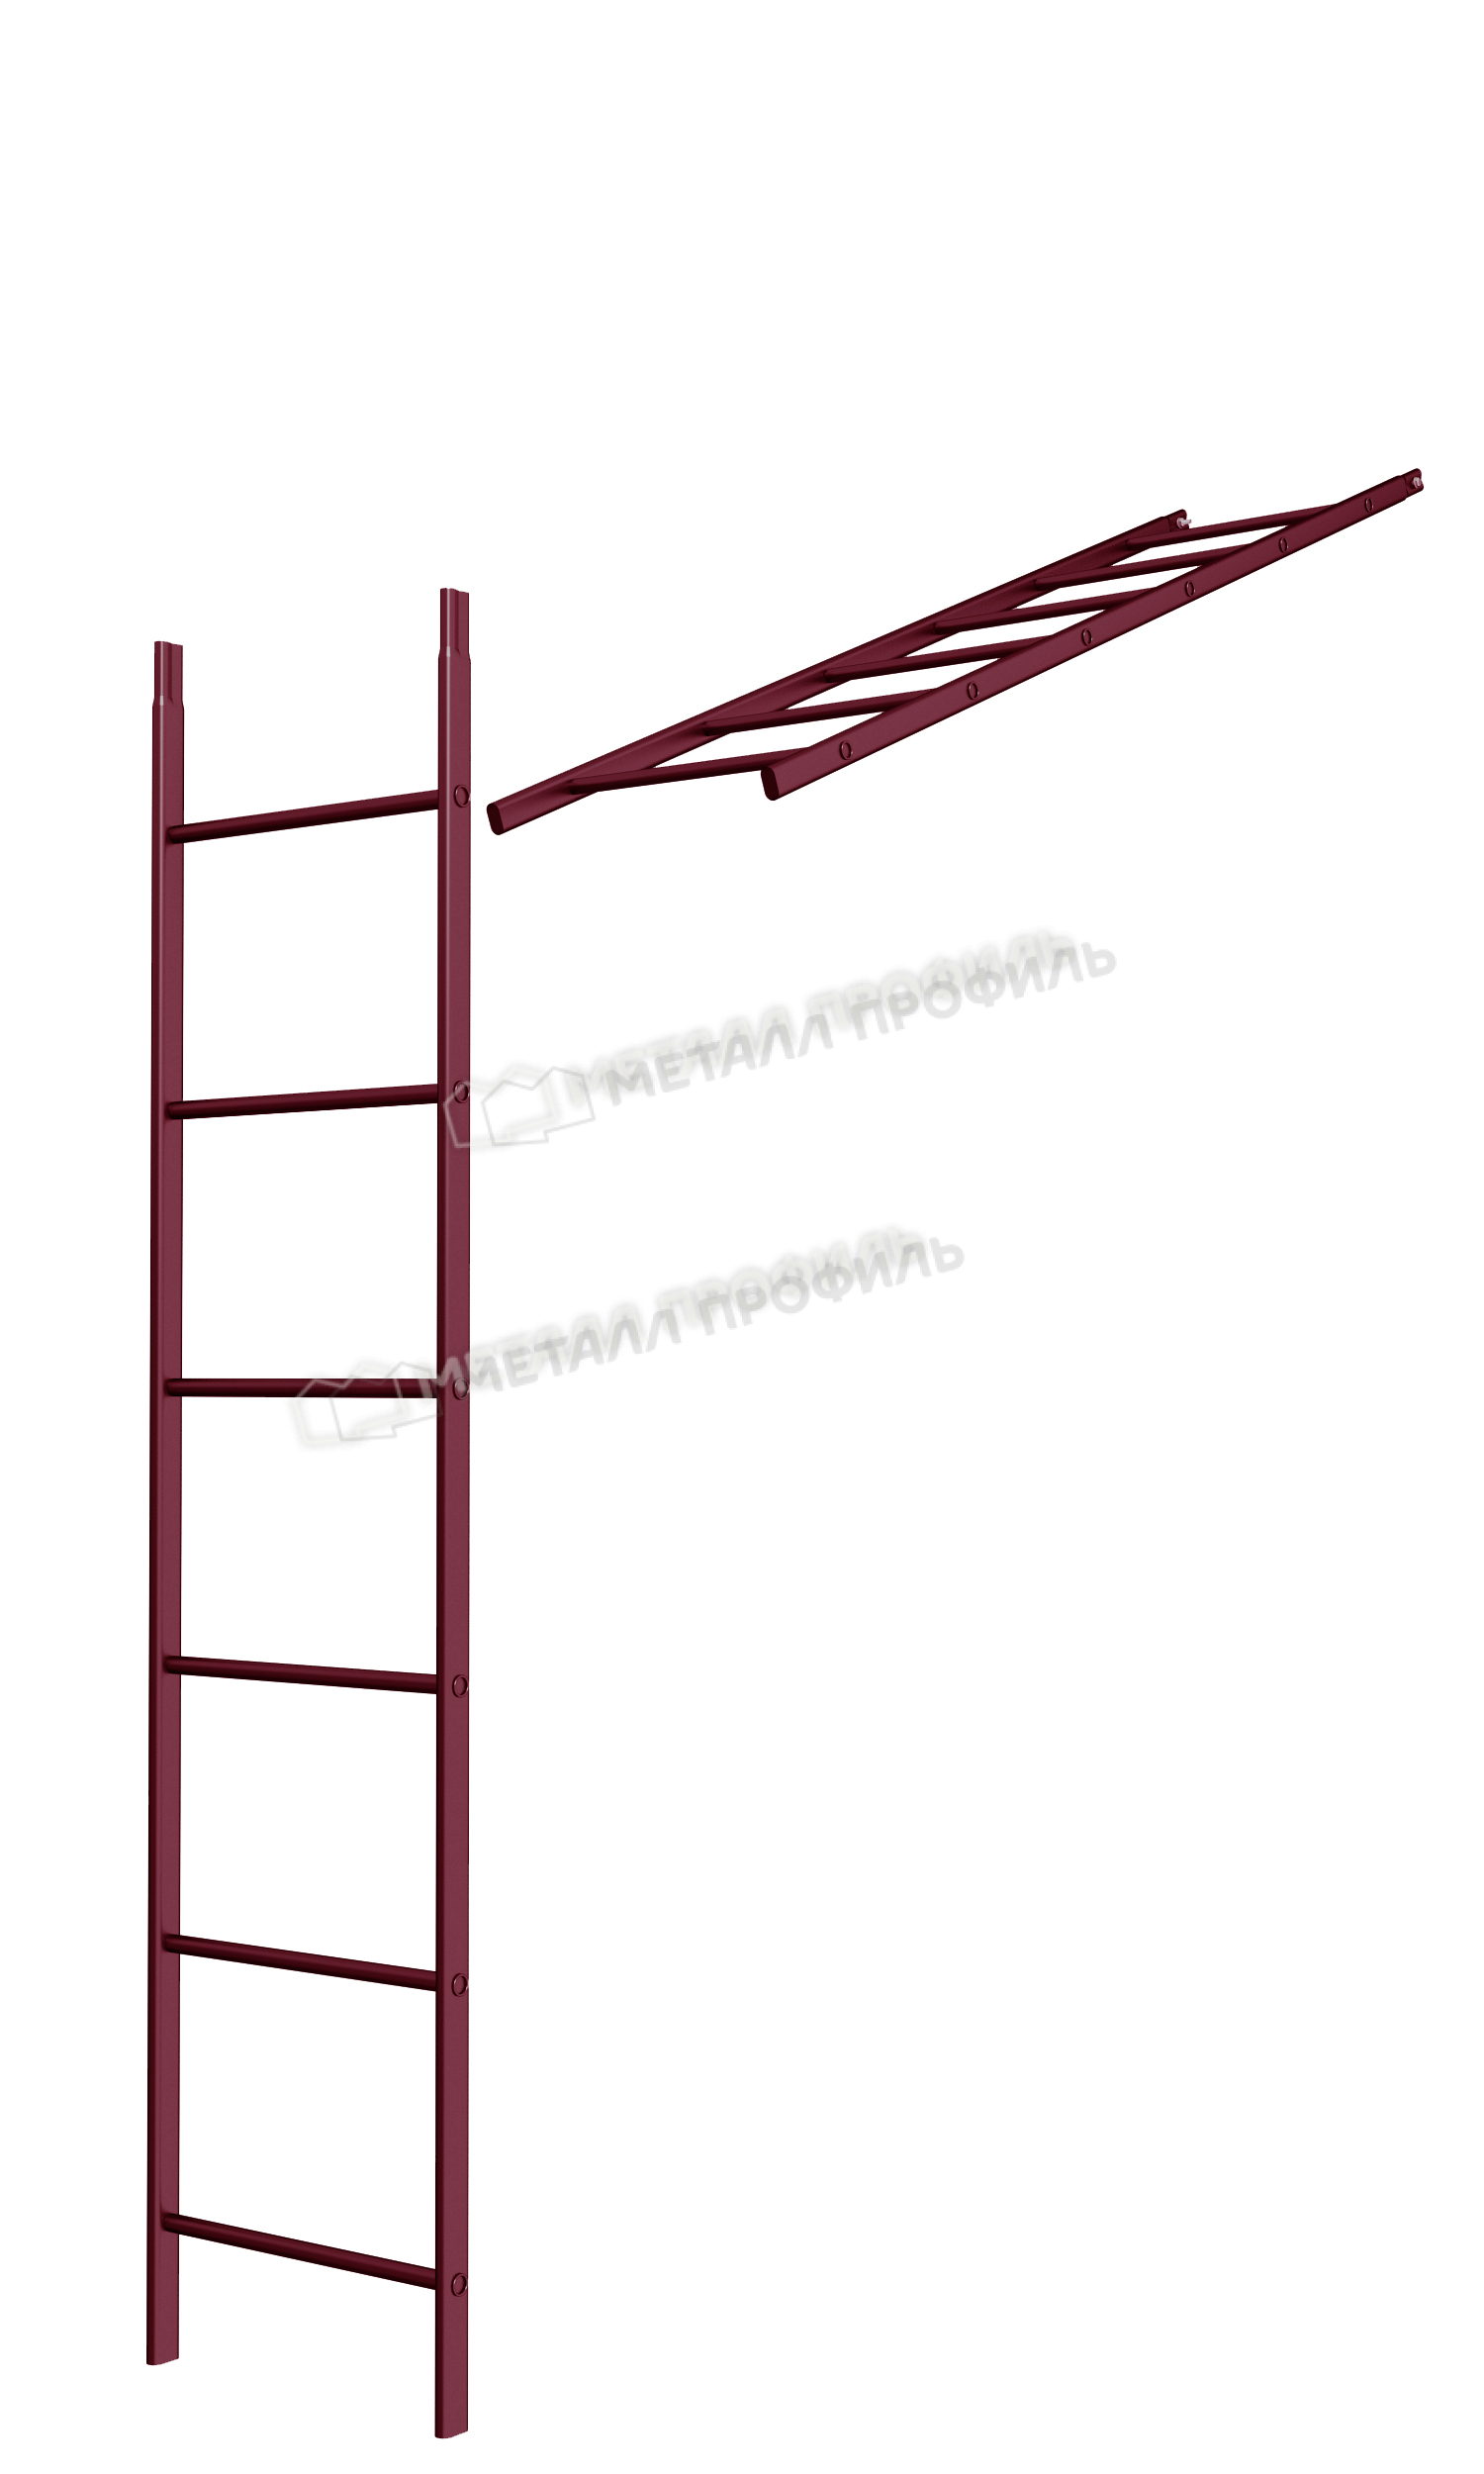 Лестница кровельная стеновая дл. 1860 мм без кронштейнов (3005)